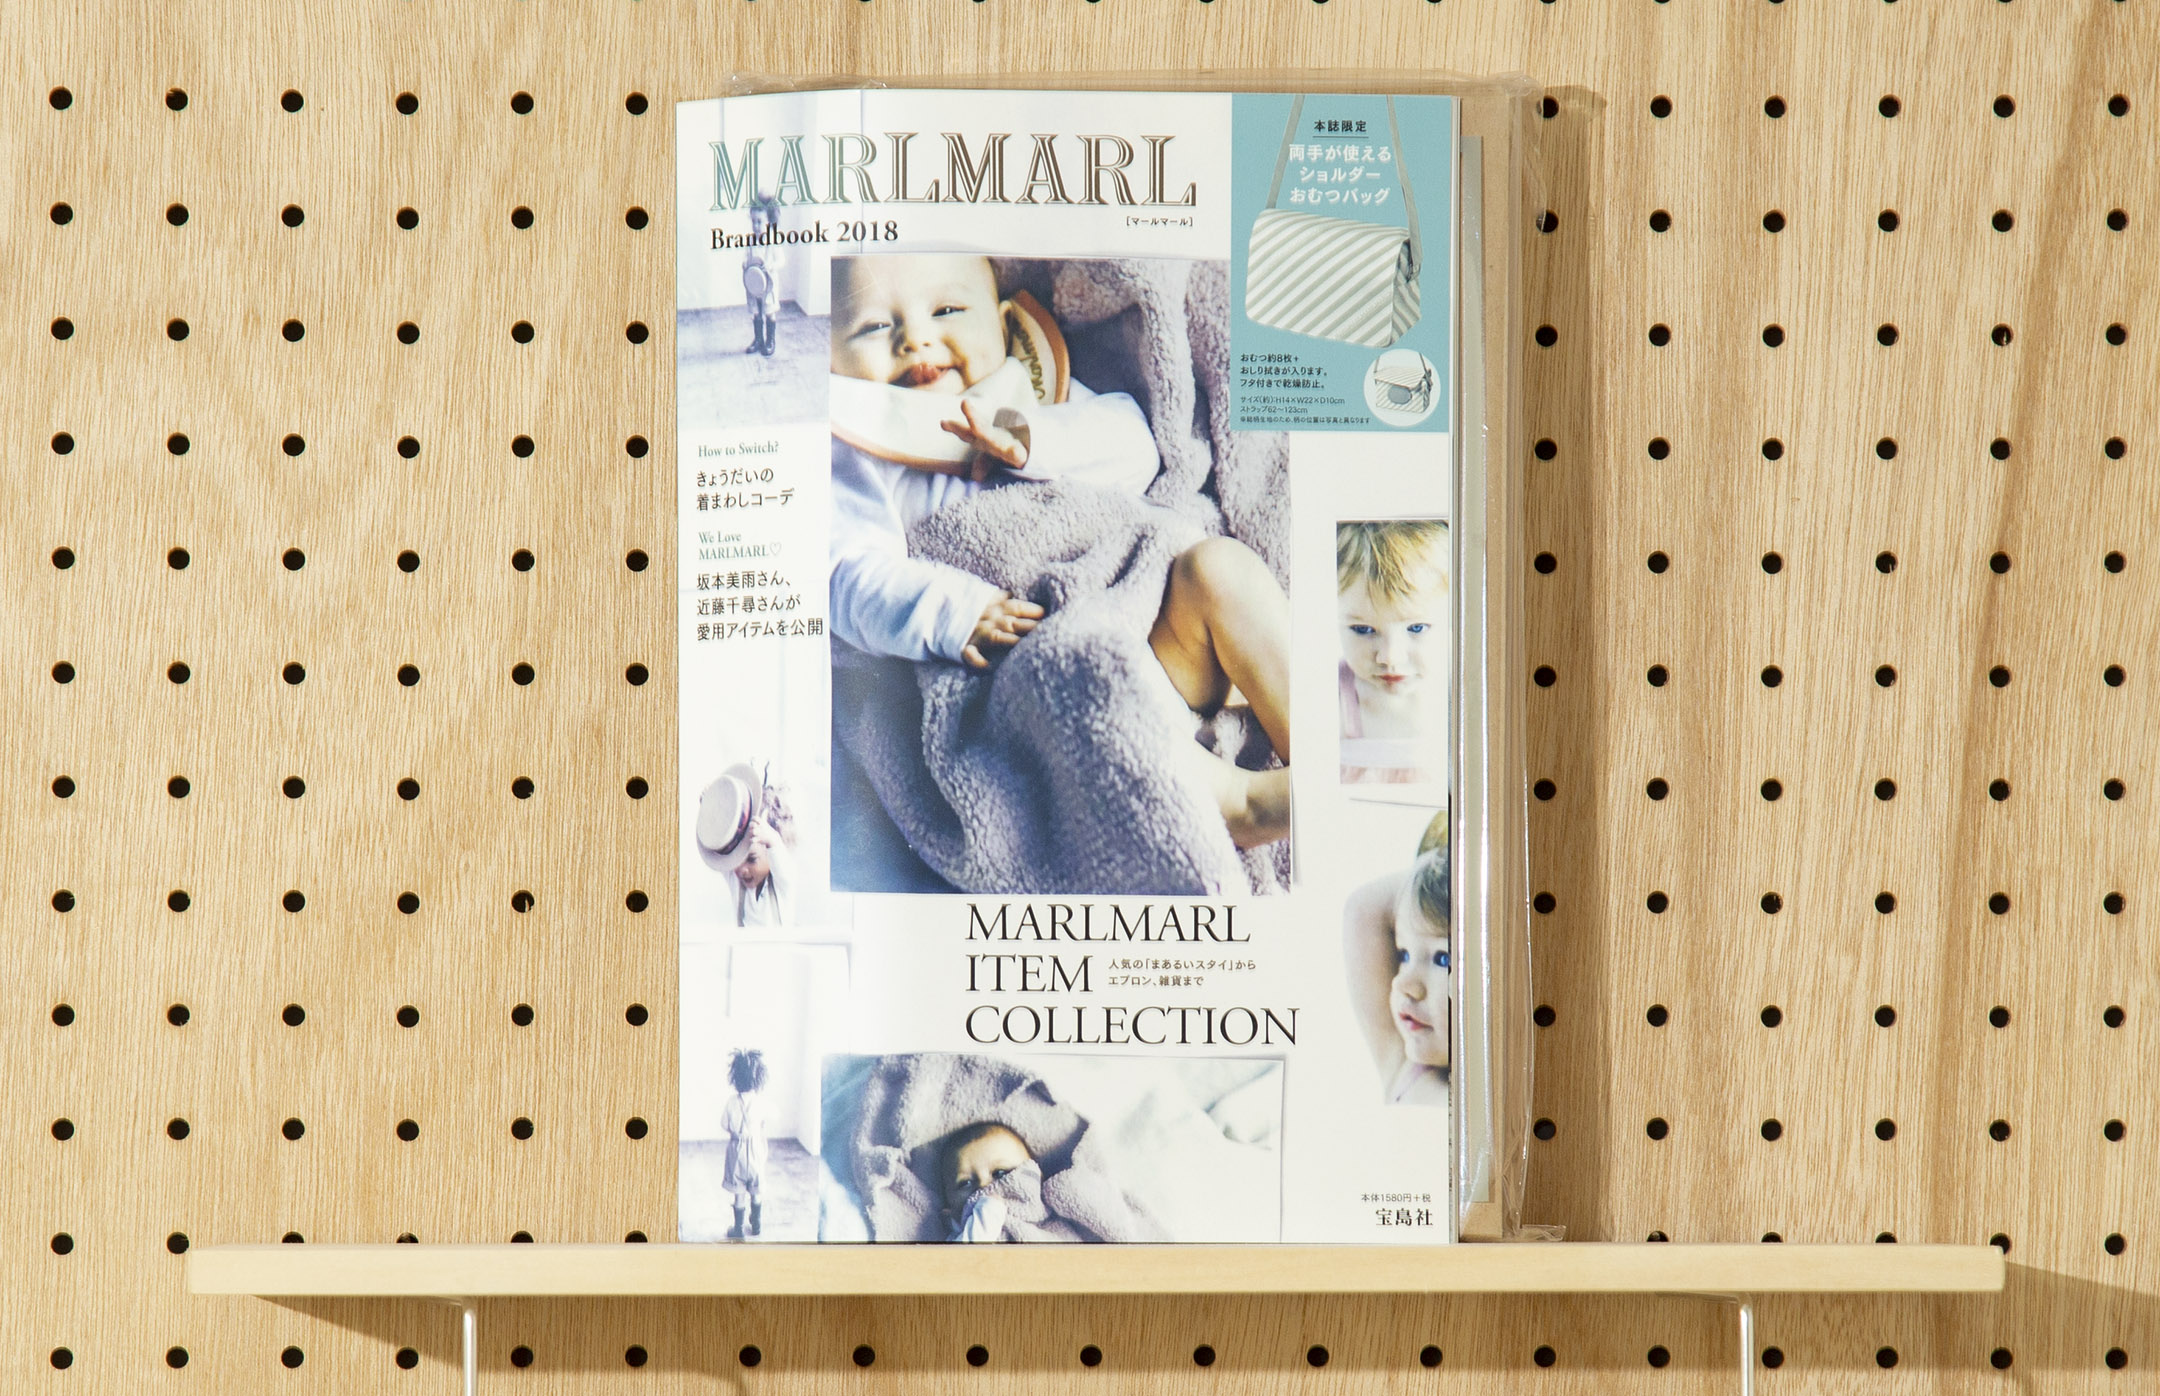 MARLMARL Brandbook 2018